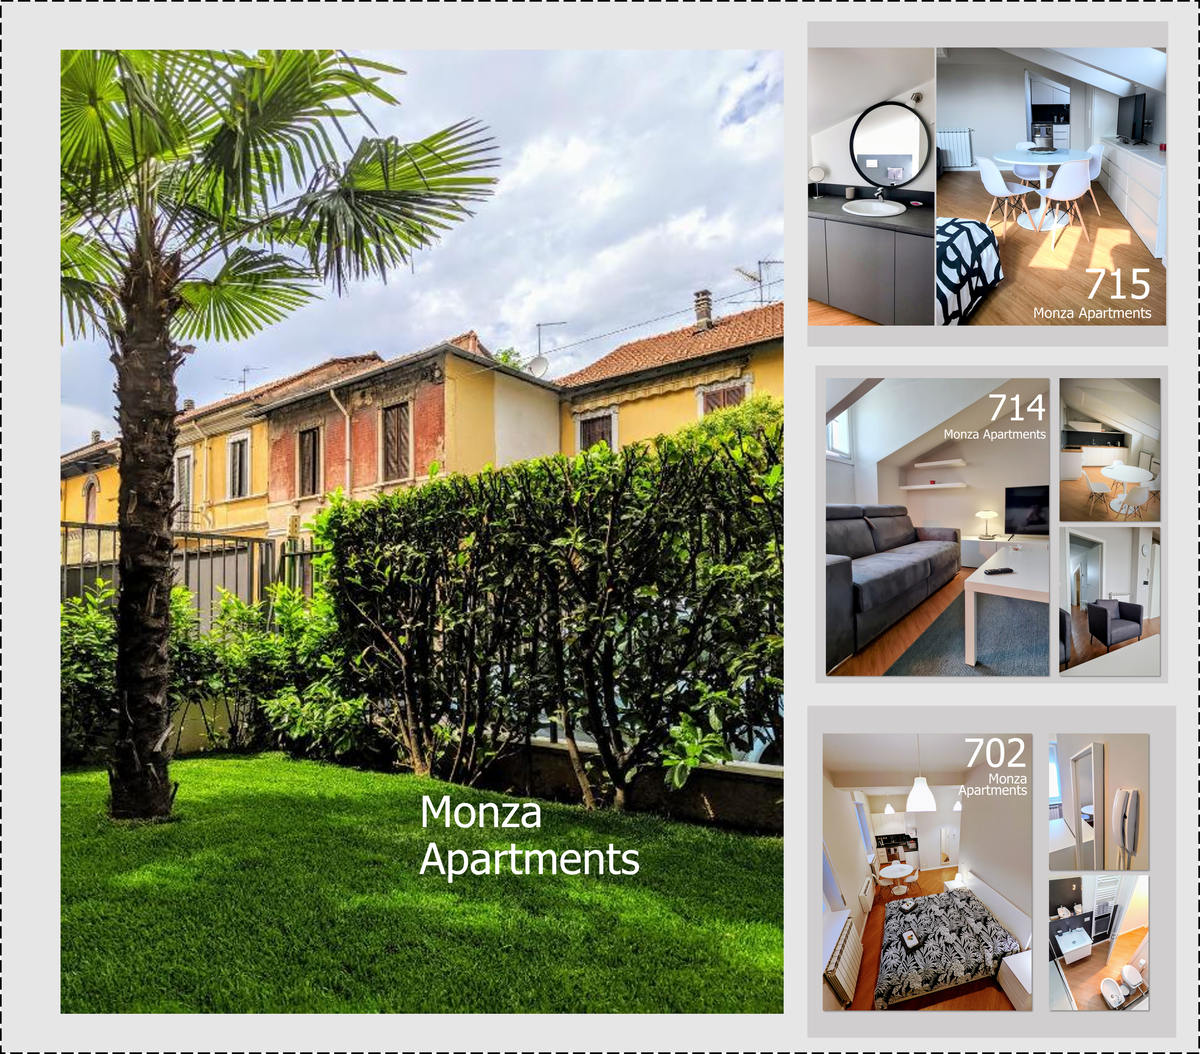 Monza Apartments, 715